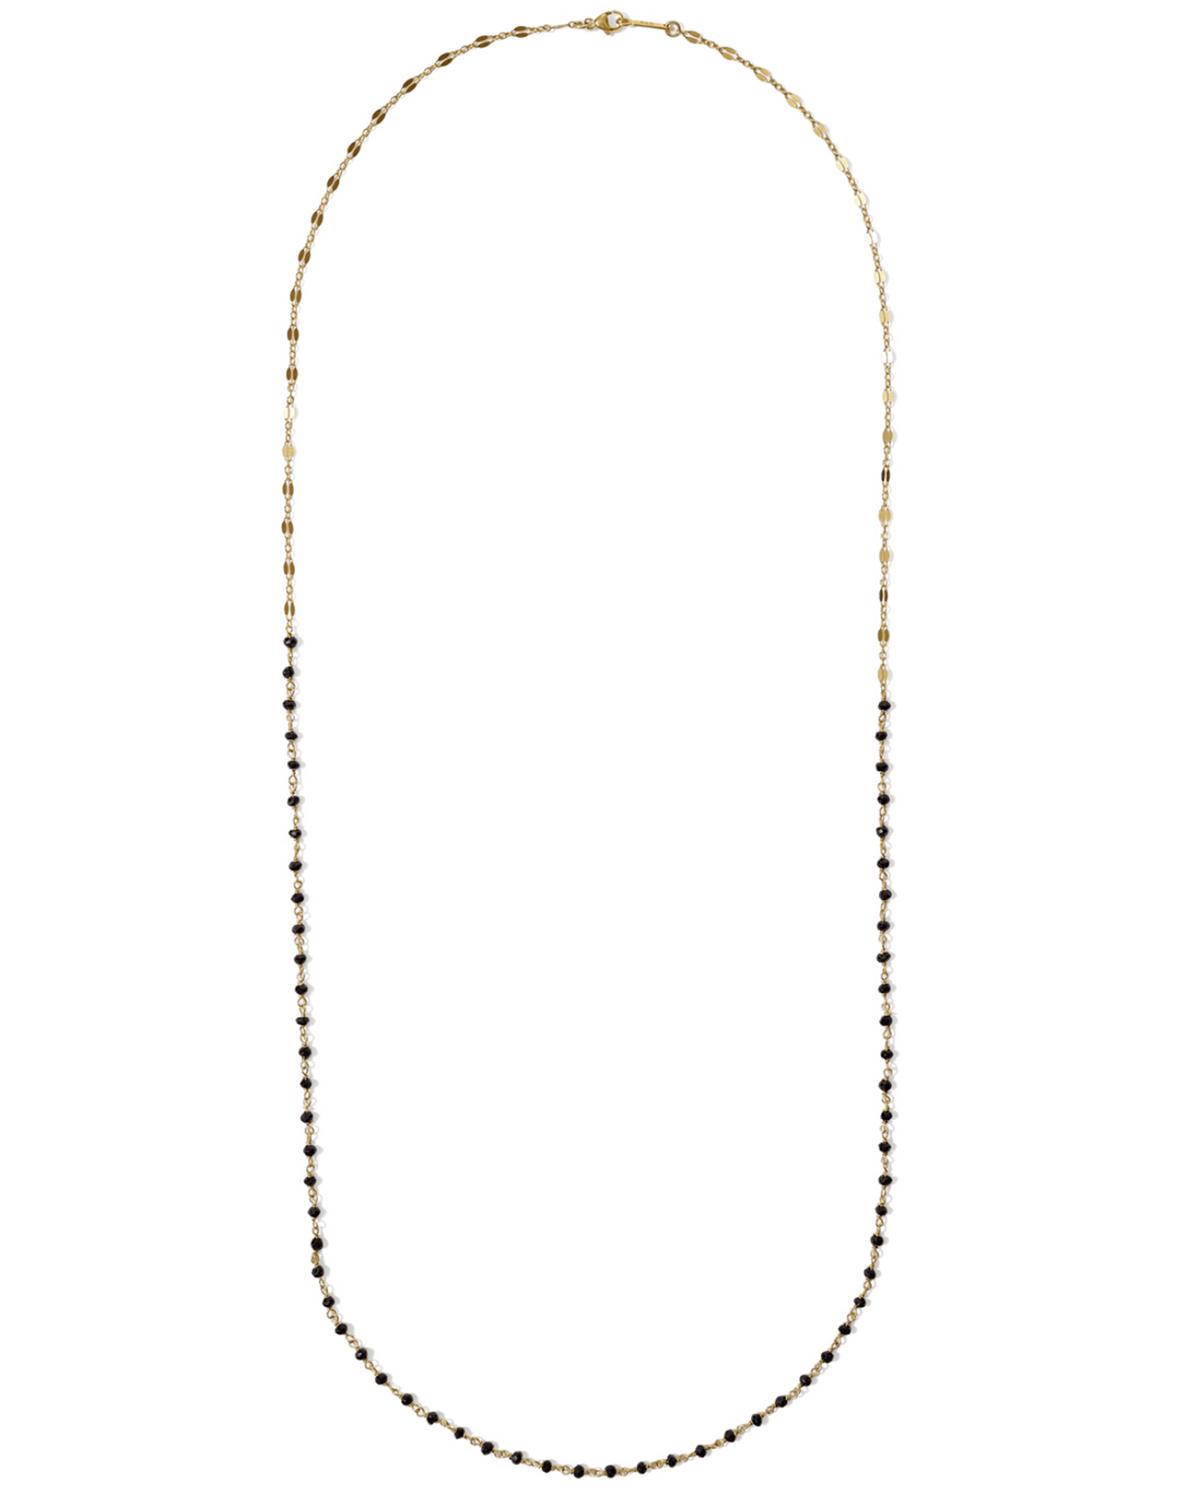 Chan Luu Jewelry Black Garnet/Gold 32" Wire Wrap Bead Necklace in Black Garnet w/ Gold